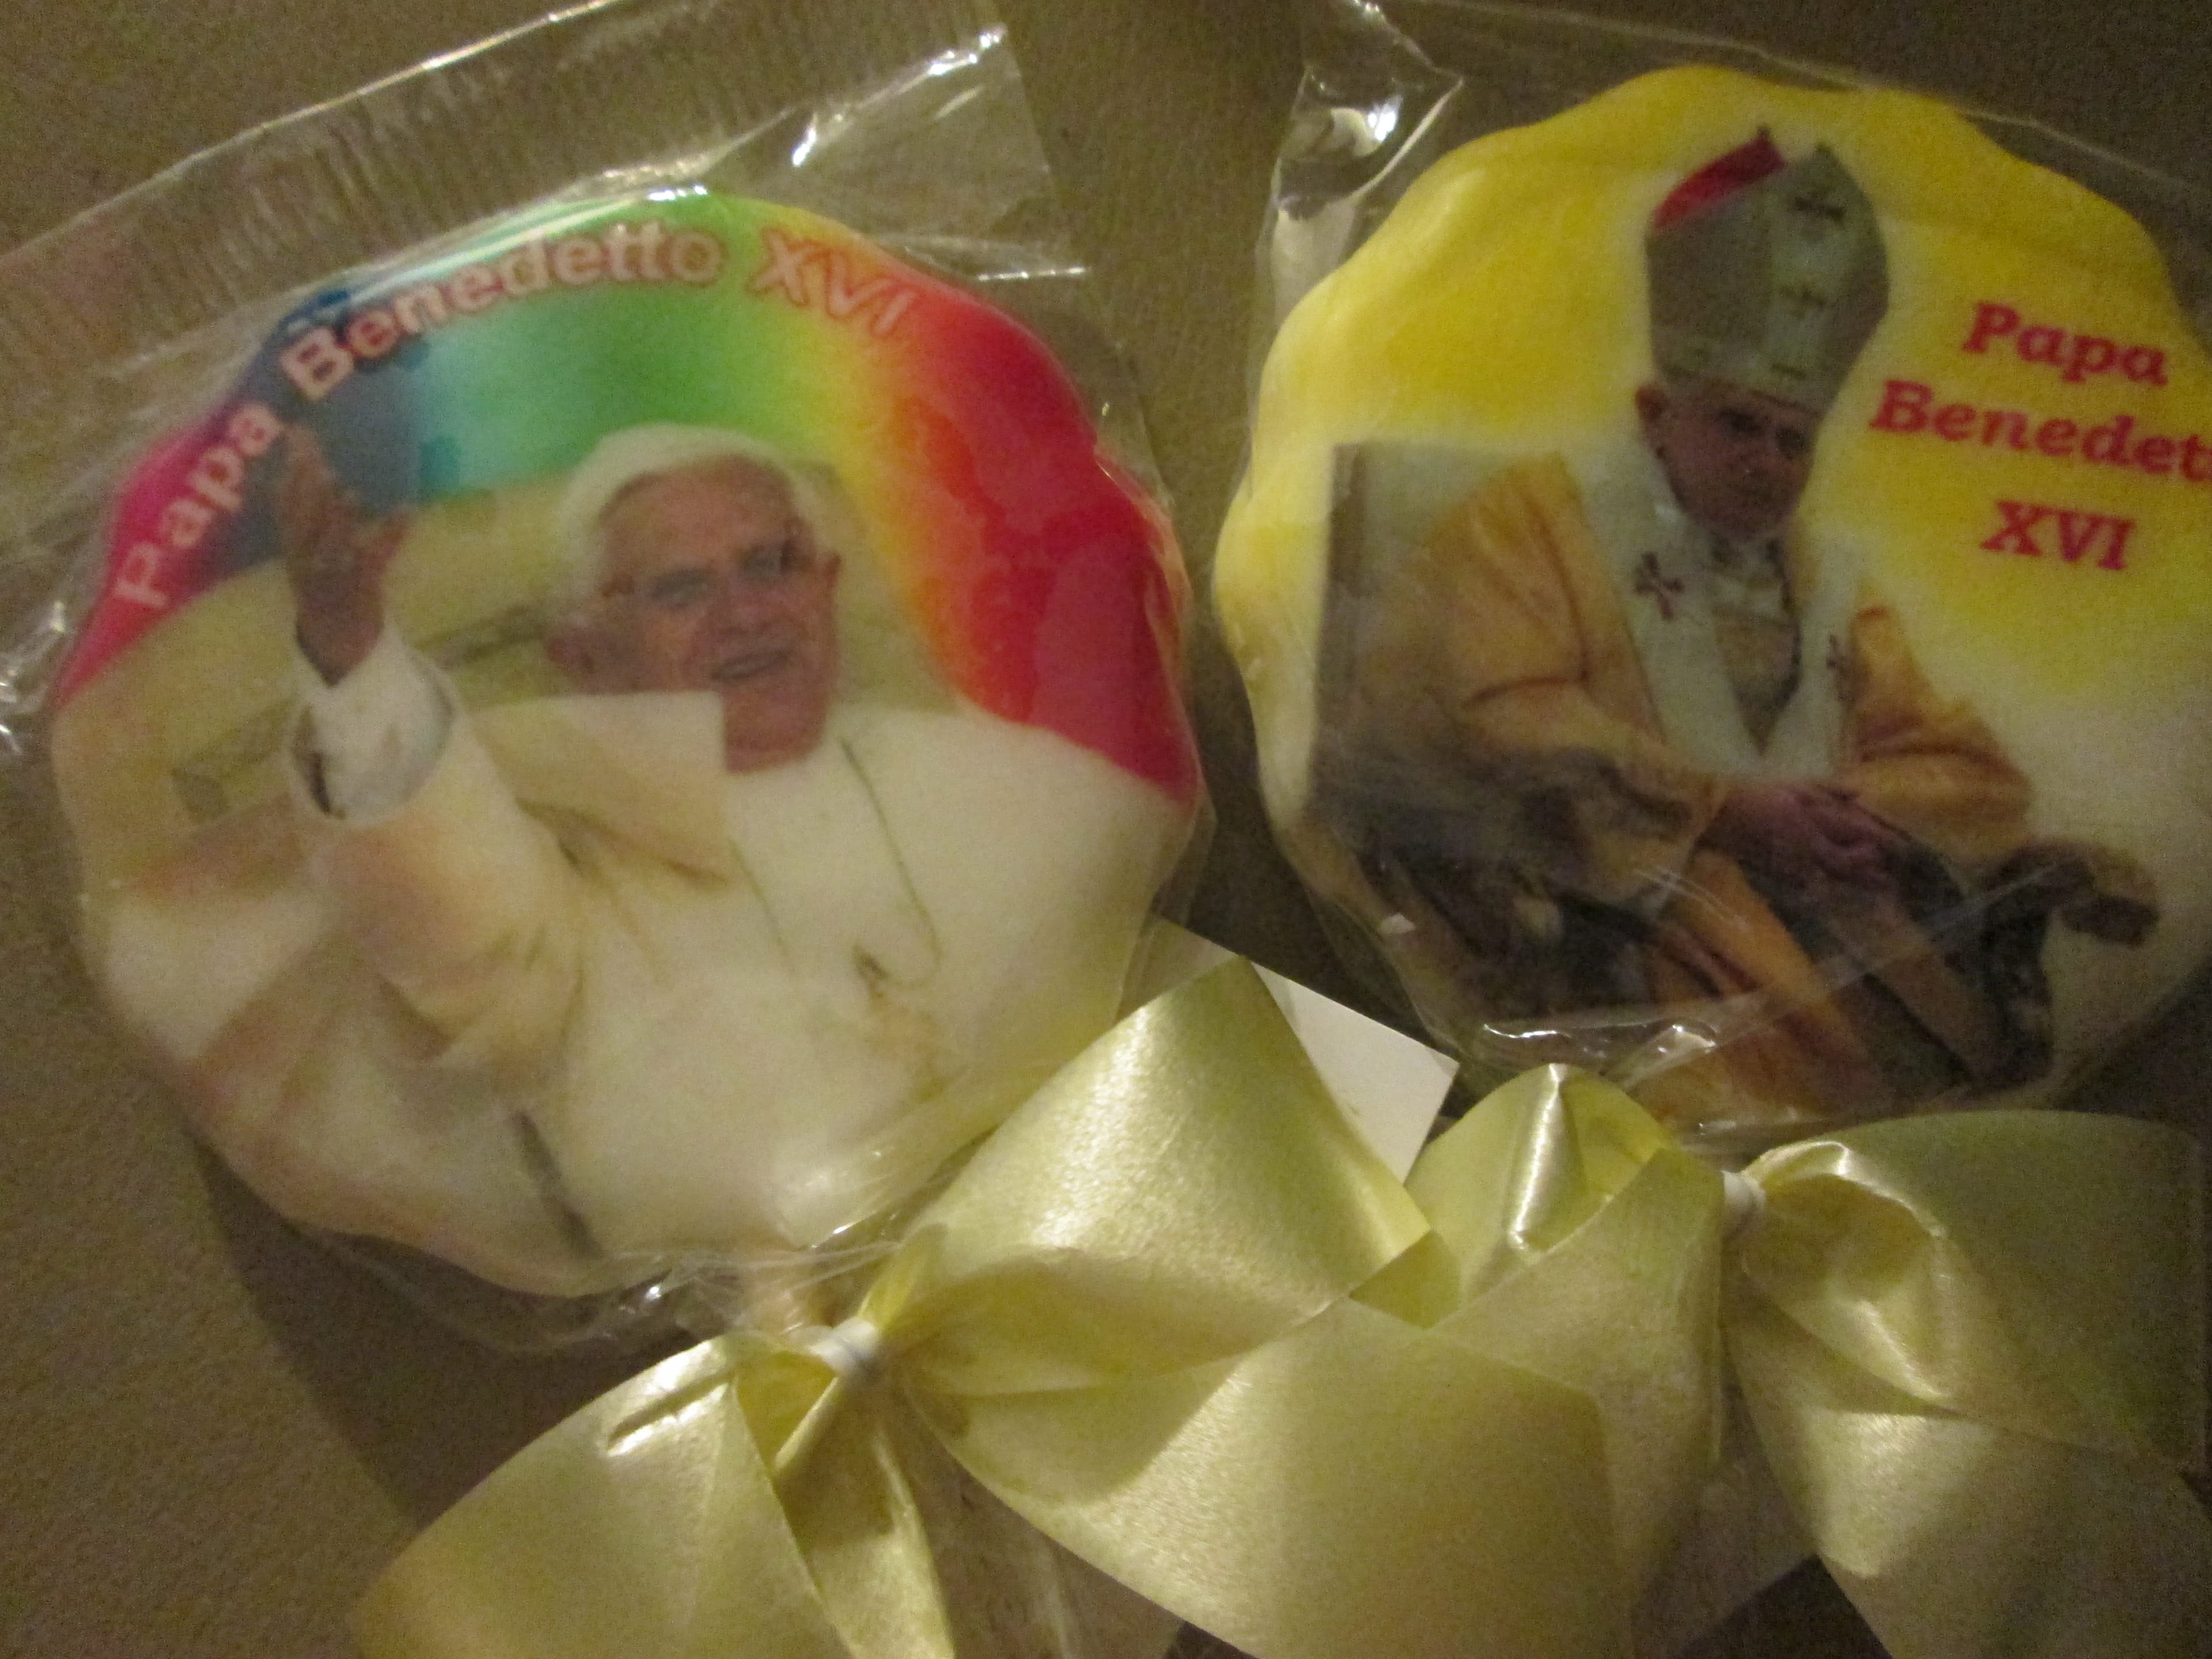 Pope Benedict lollipops in Rome, Italy